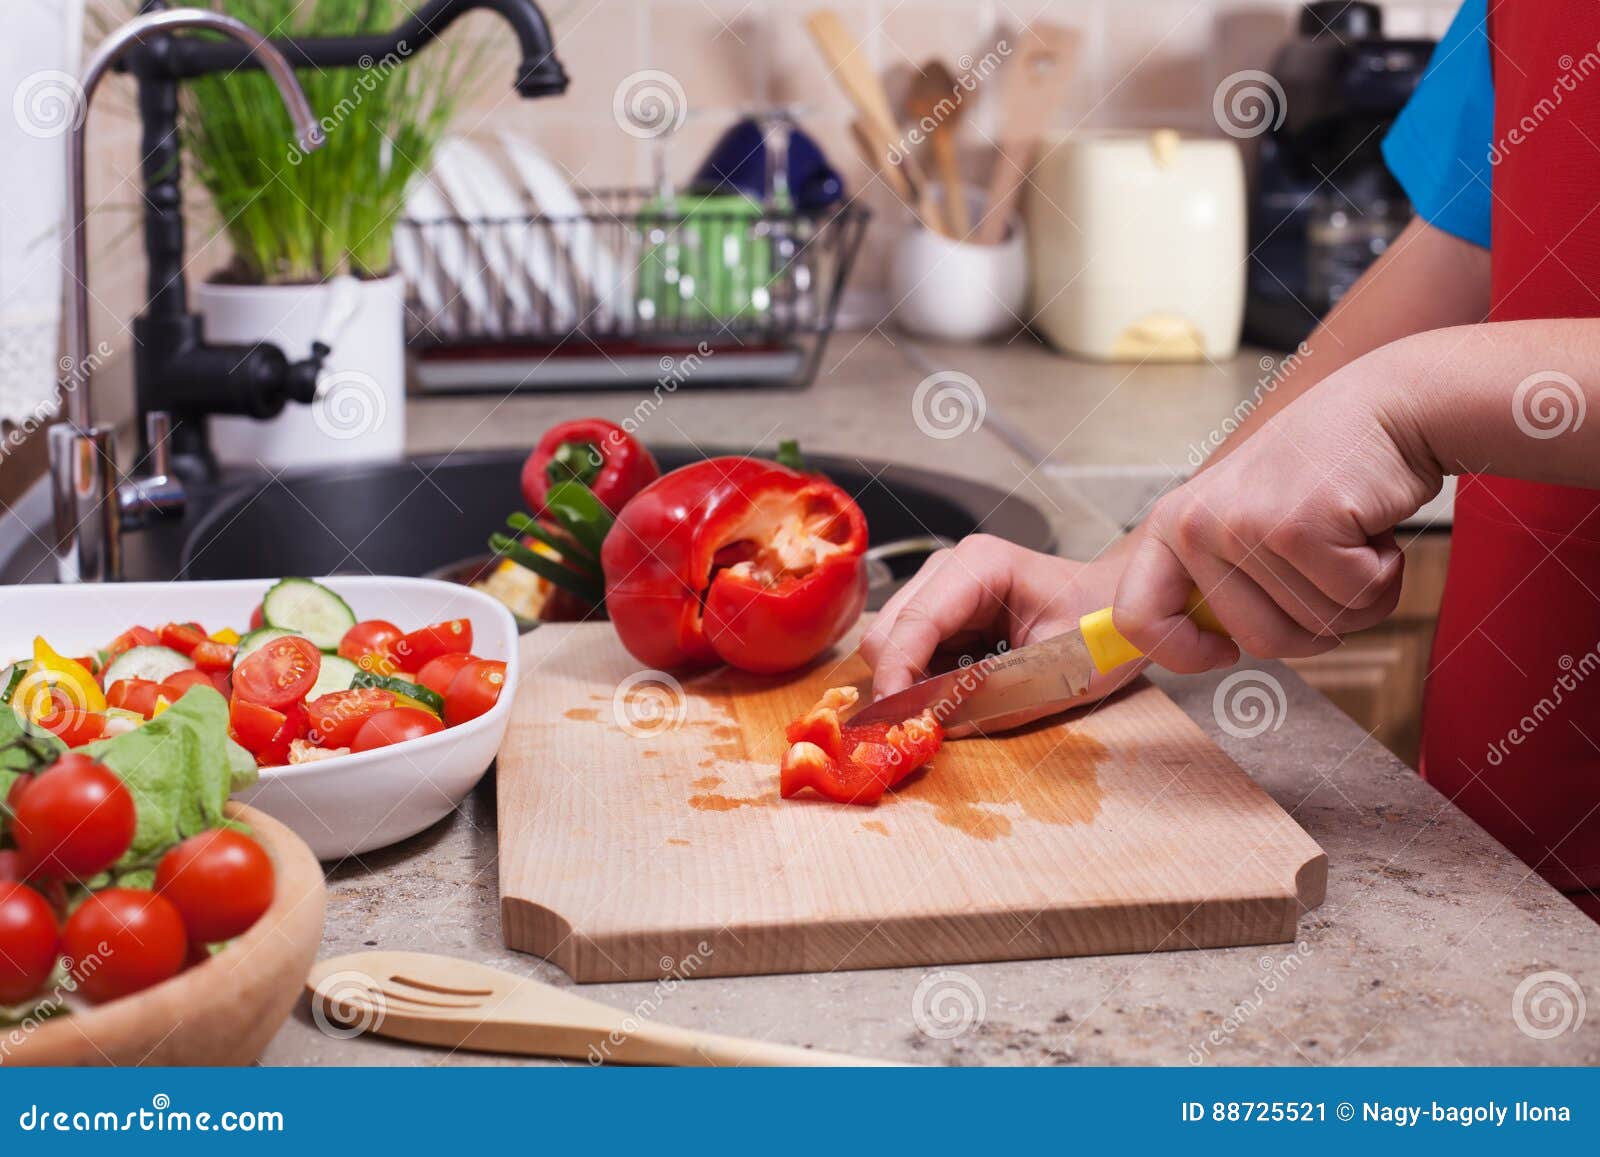 child hands chopping a red bellpepper for a fresh vegetables sal